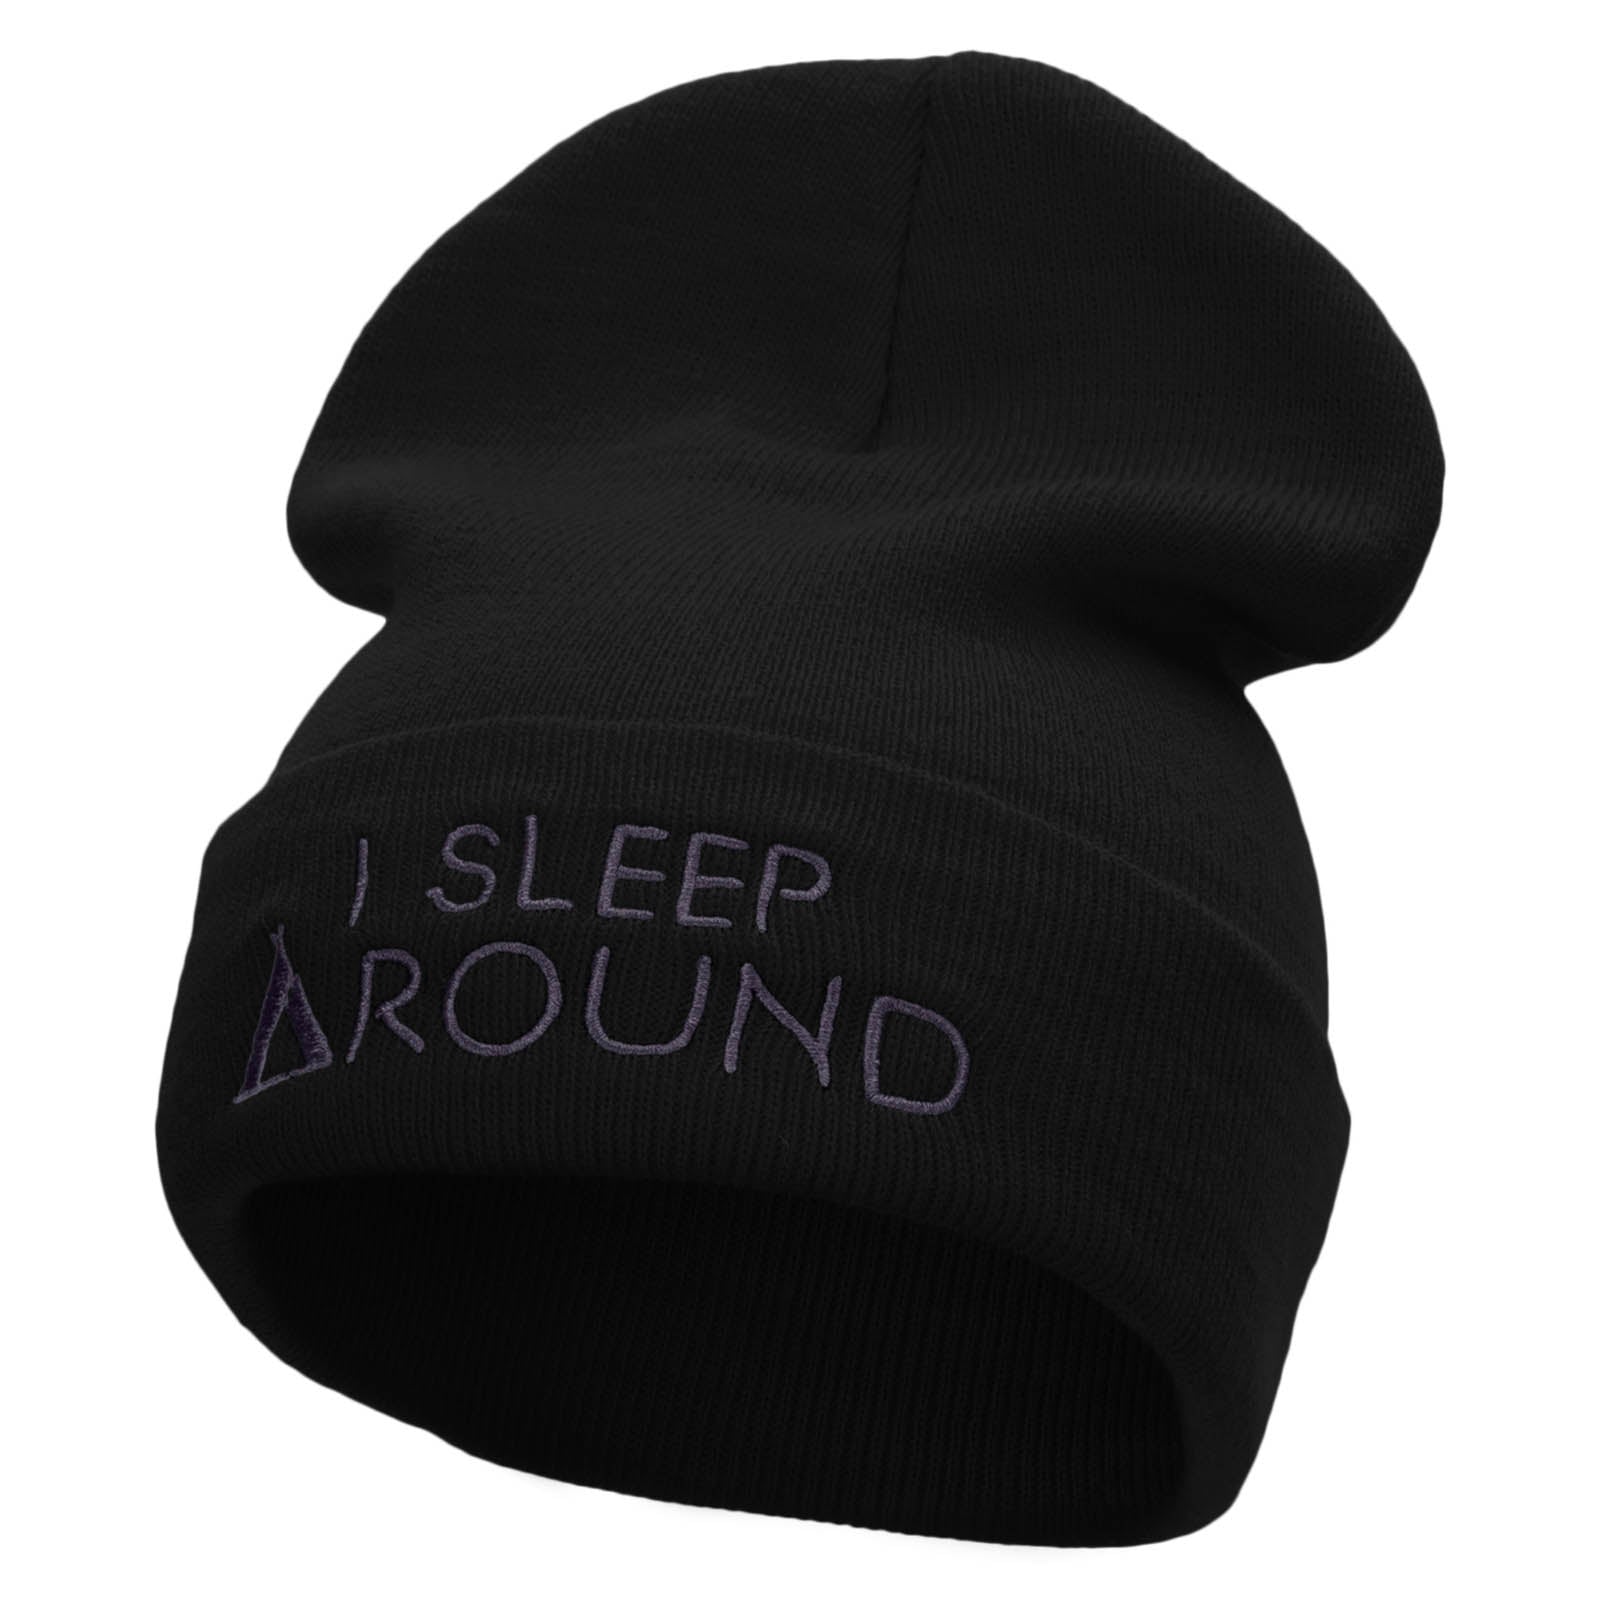 I Sleep Around Embroidered 12 Inch Long Knitted Beanie - Black OSFM